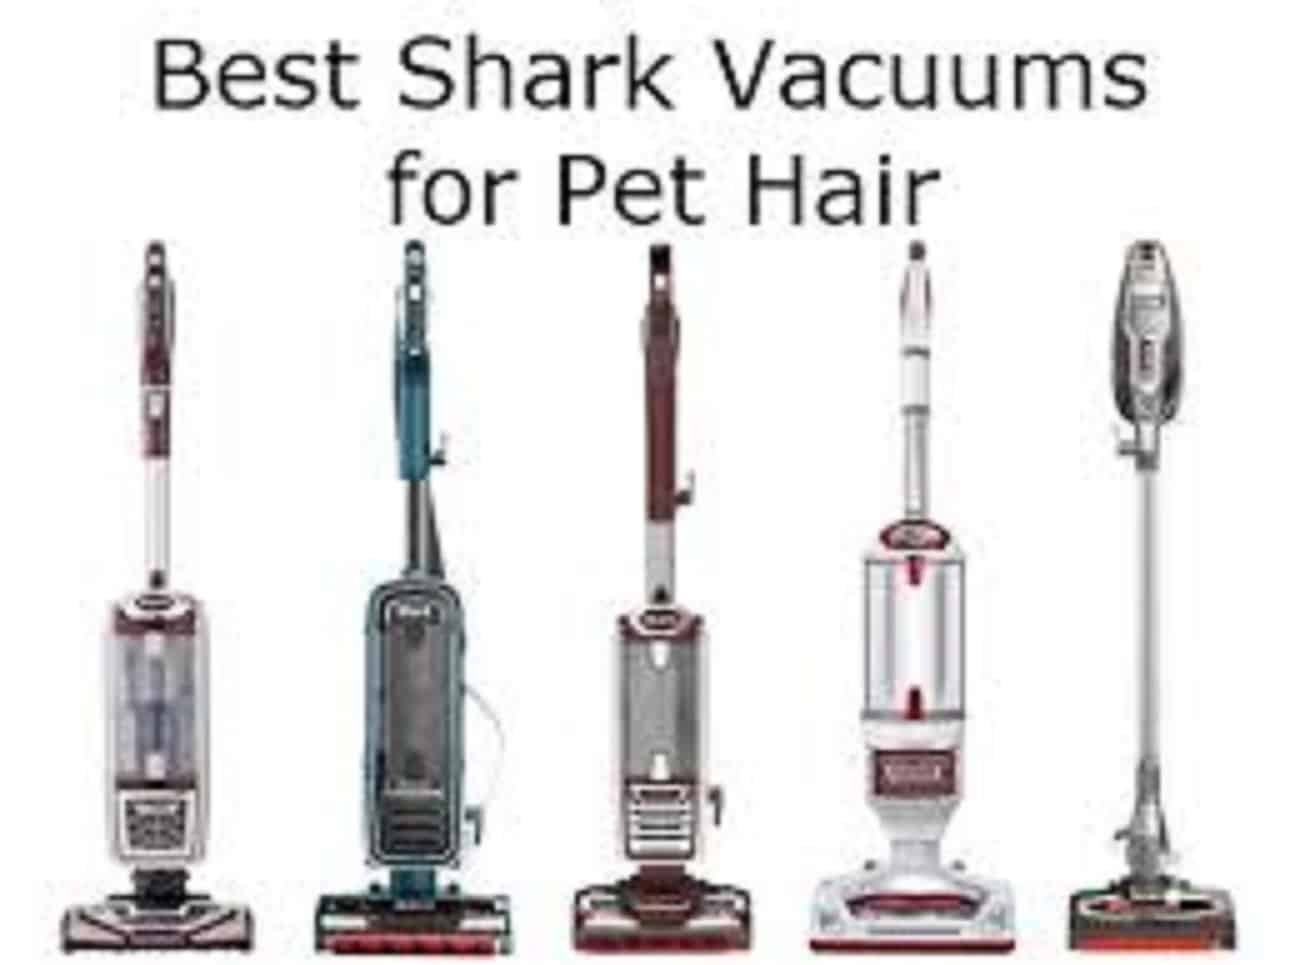 Best Shark Vacuum For Pet Hair in 2022